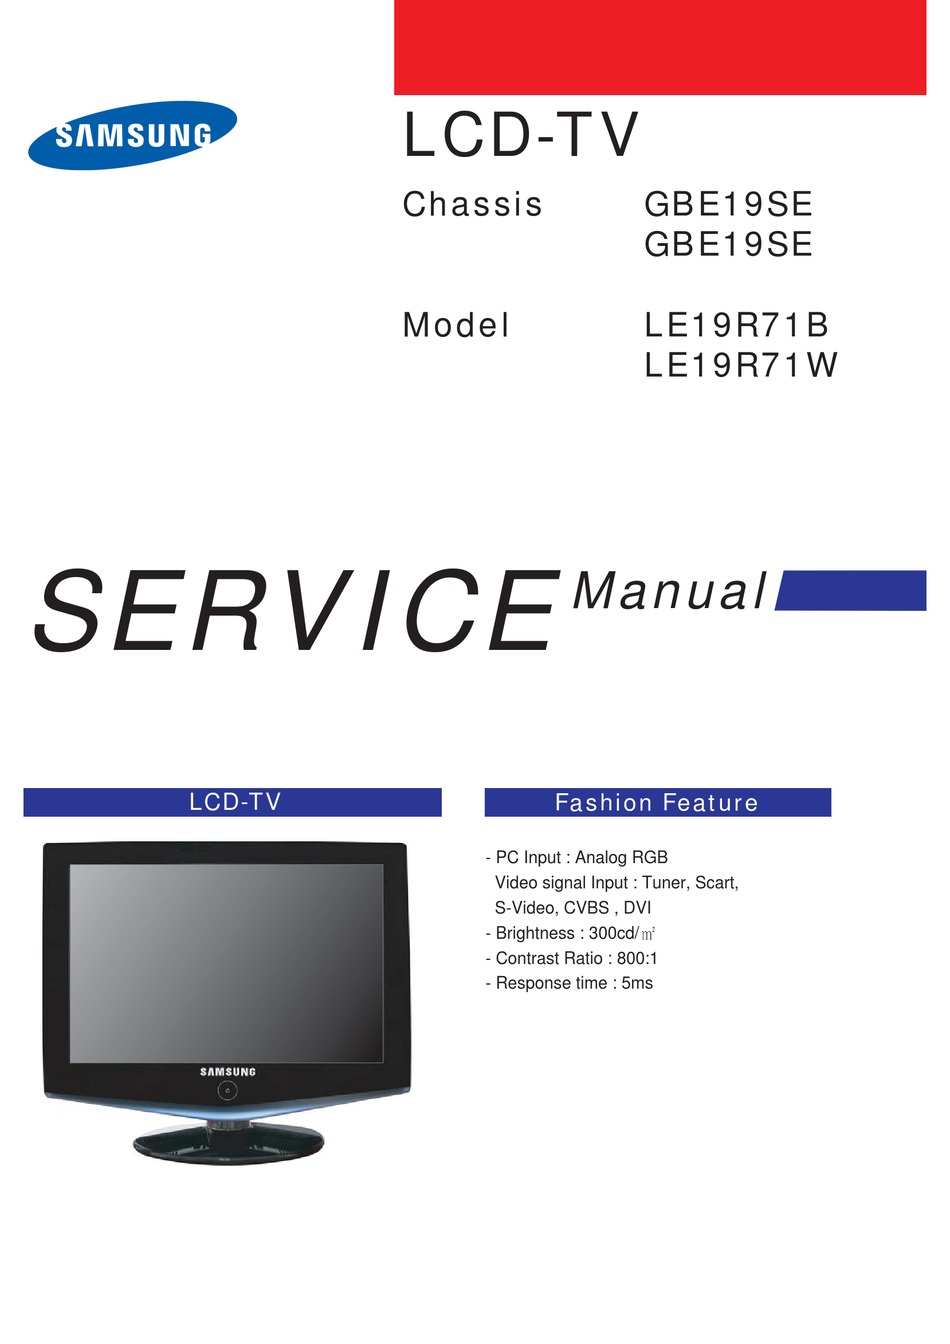 SAMSUNG GBE19SE SERVICE MANUAL Pdf Download | ManualsLib